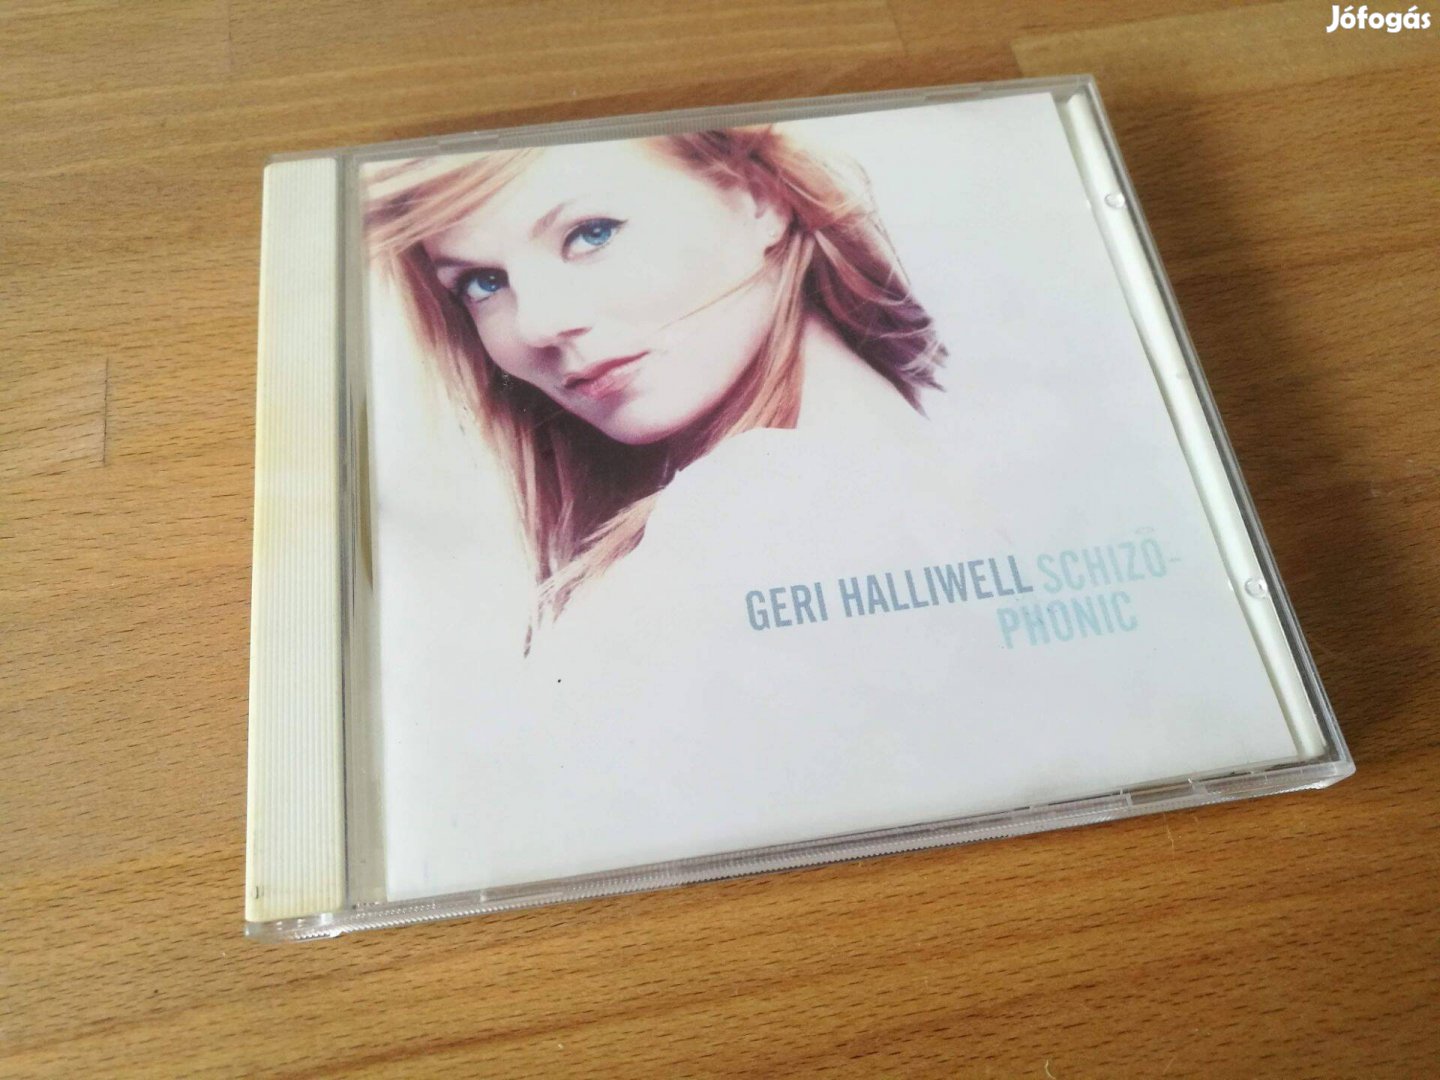 Geri Halliwell - Spice Girls - Schizophonic (EMI Records, 1999, CD)